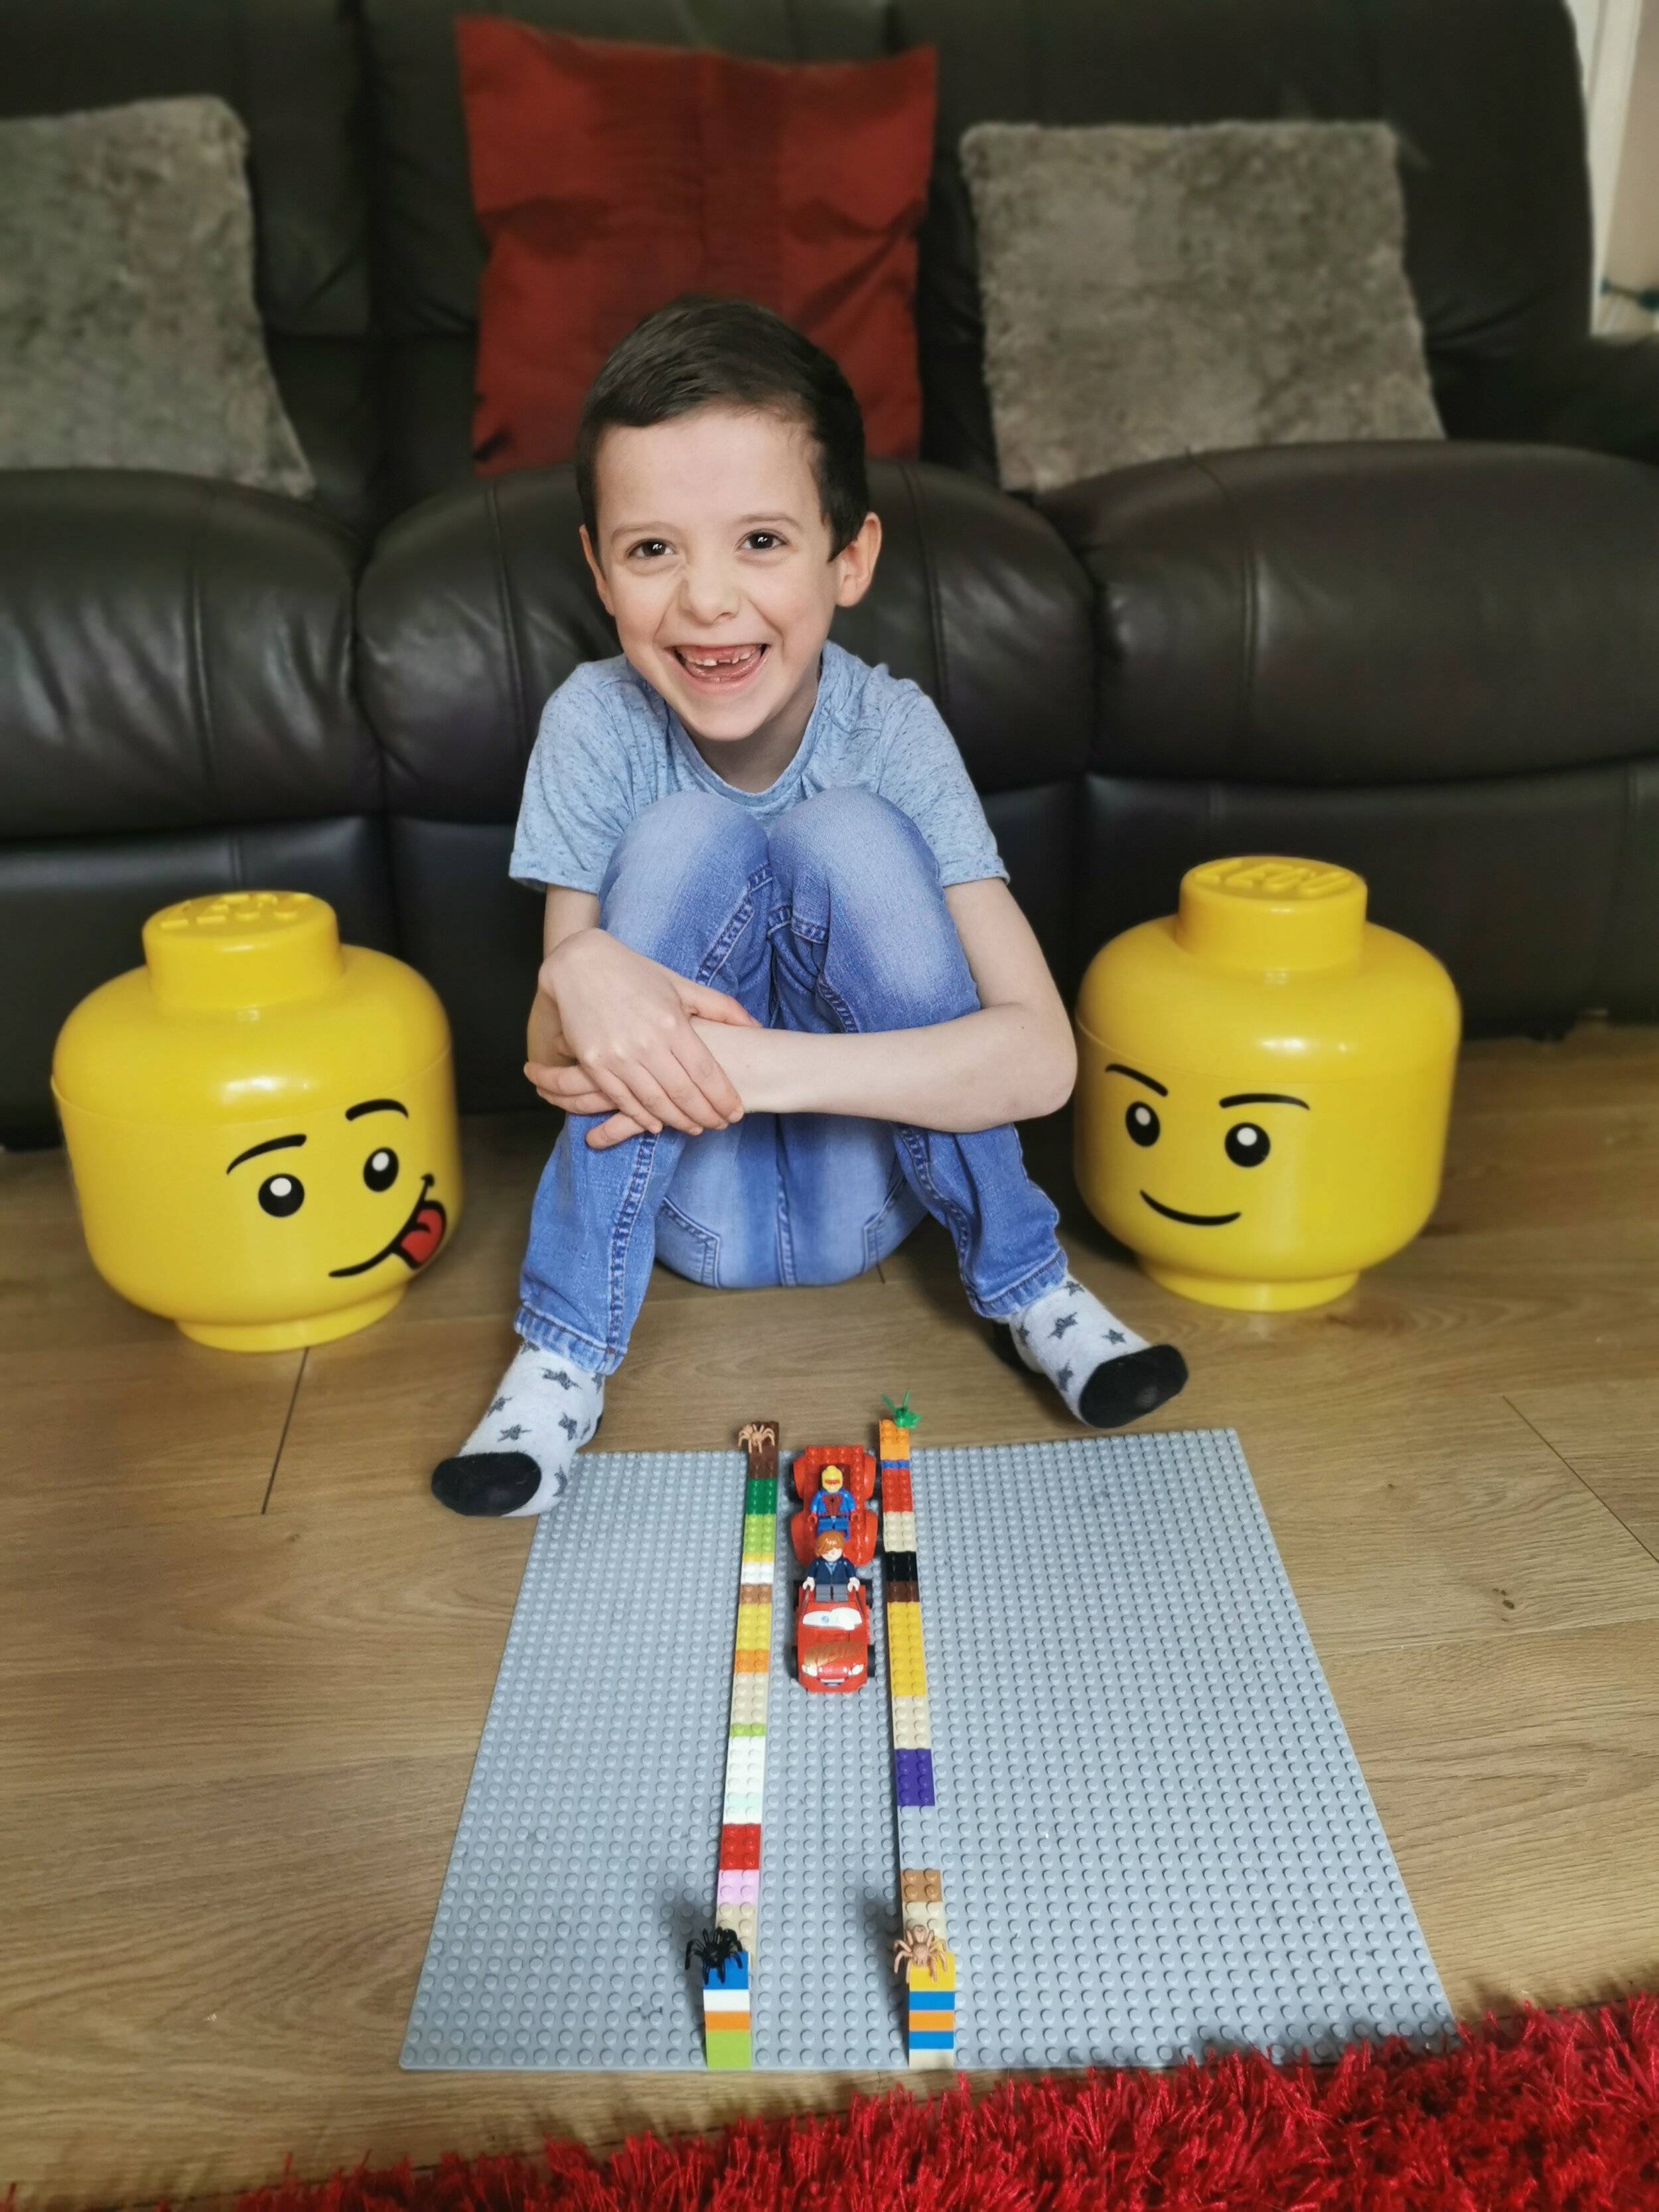 Caolan loves Lego!